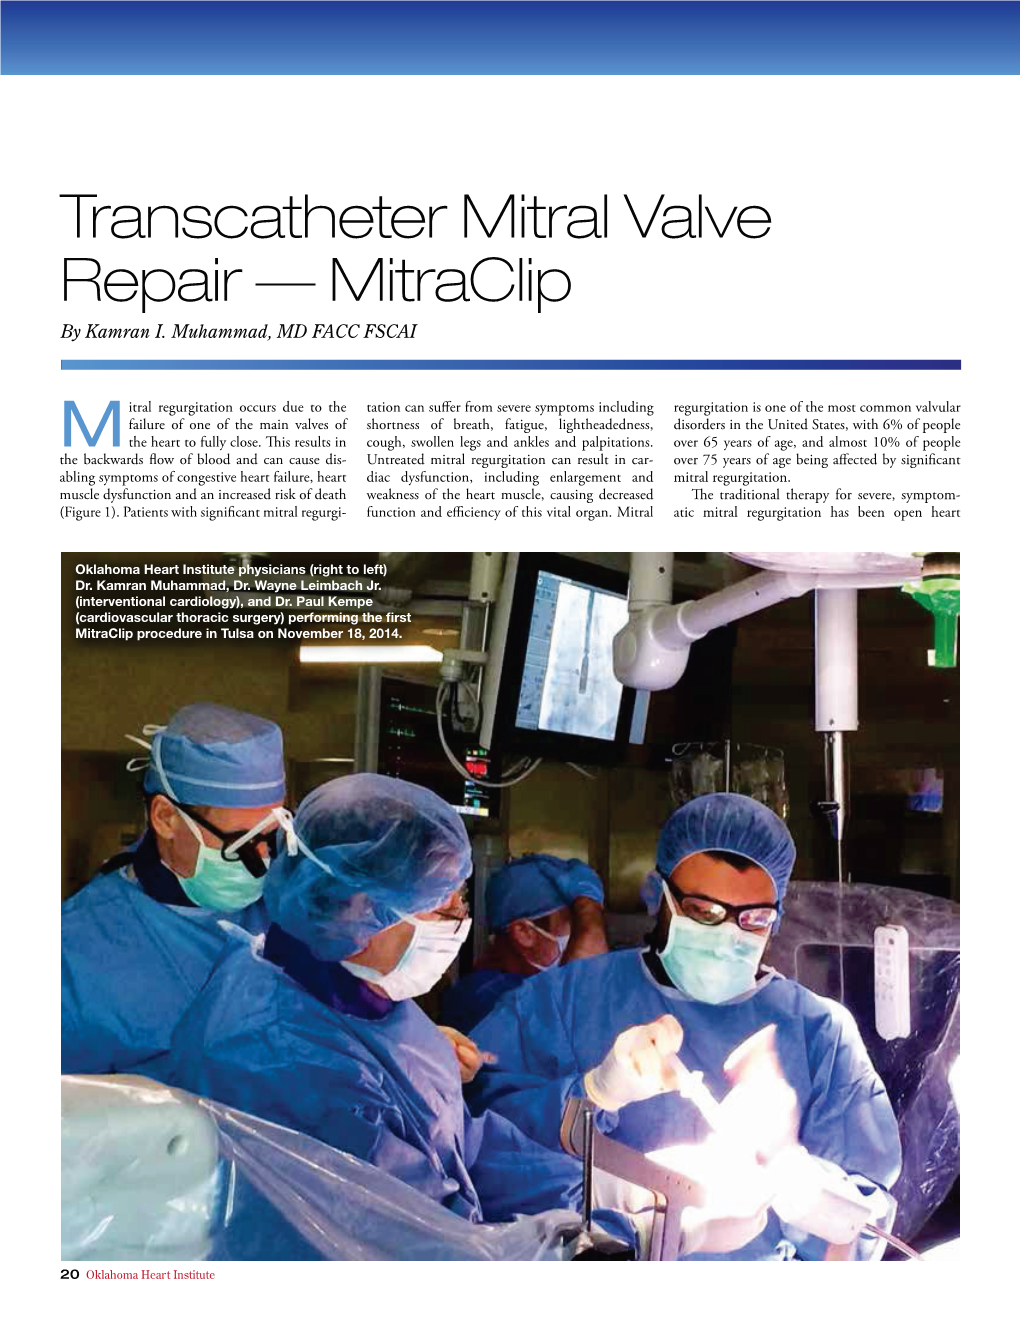 Transcatheter Mitral Valve Repair — Mitraclip by Kamran I